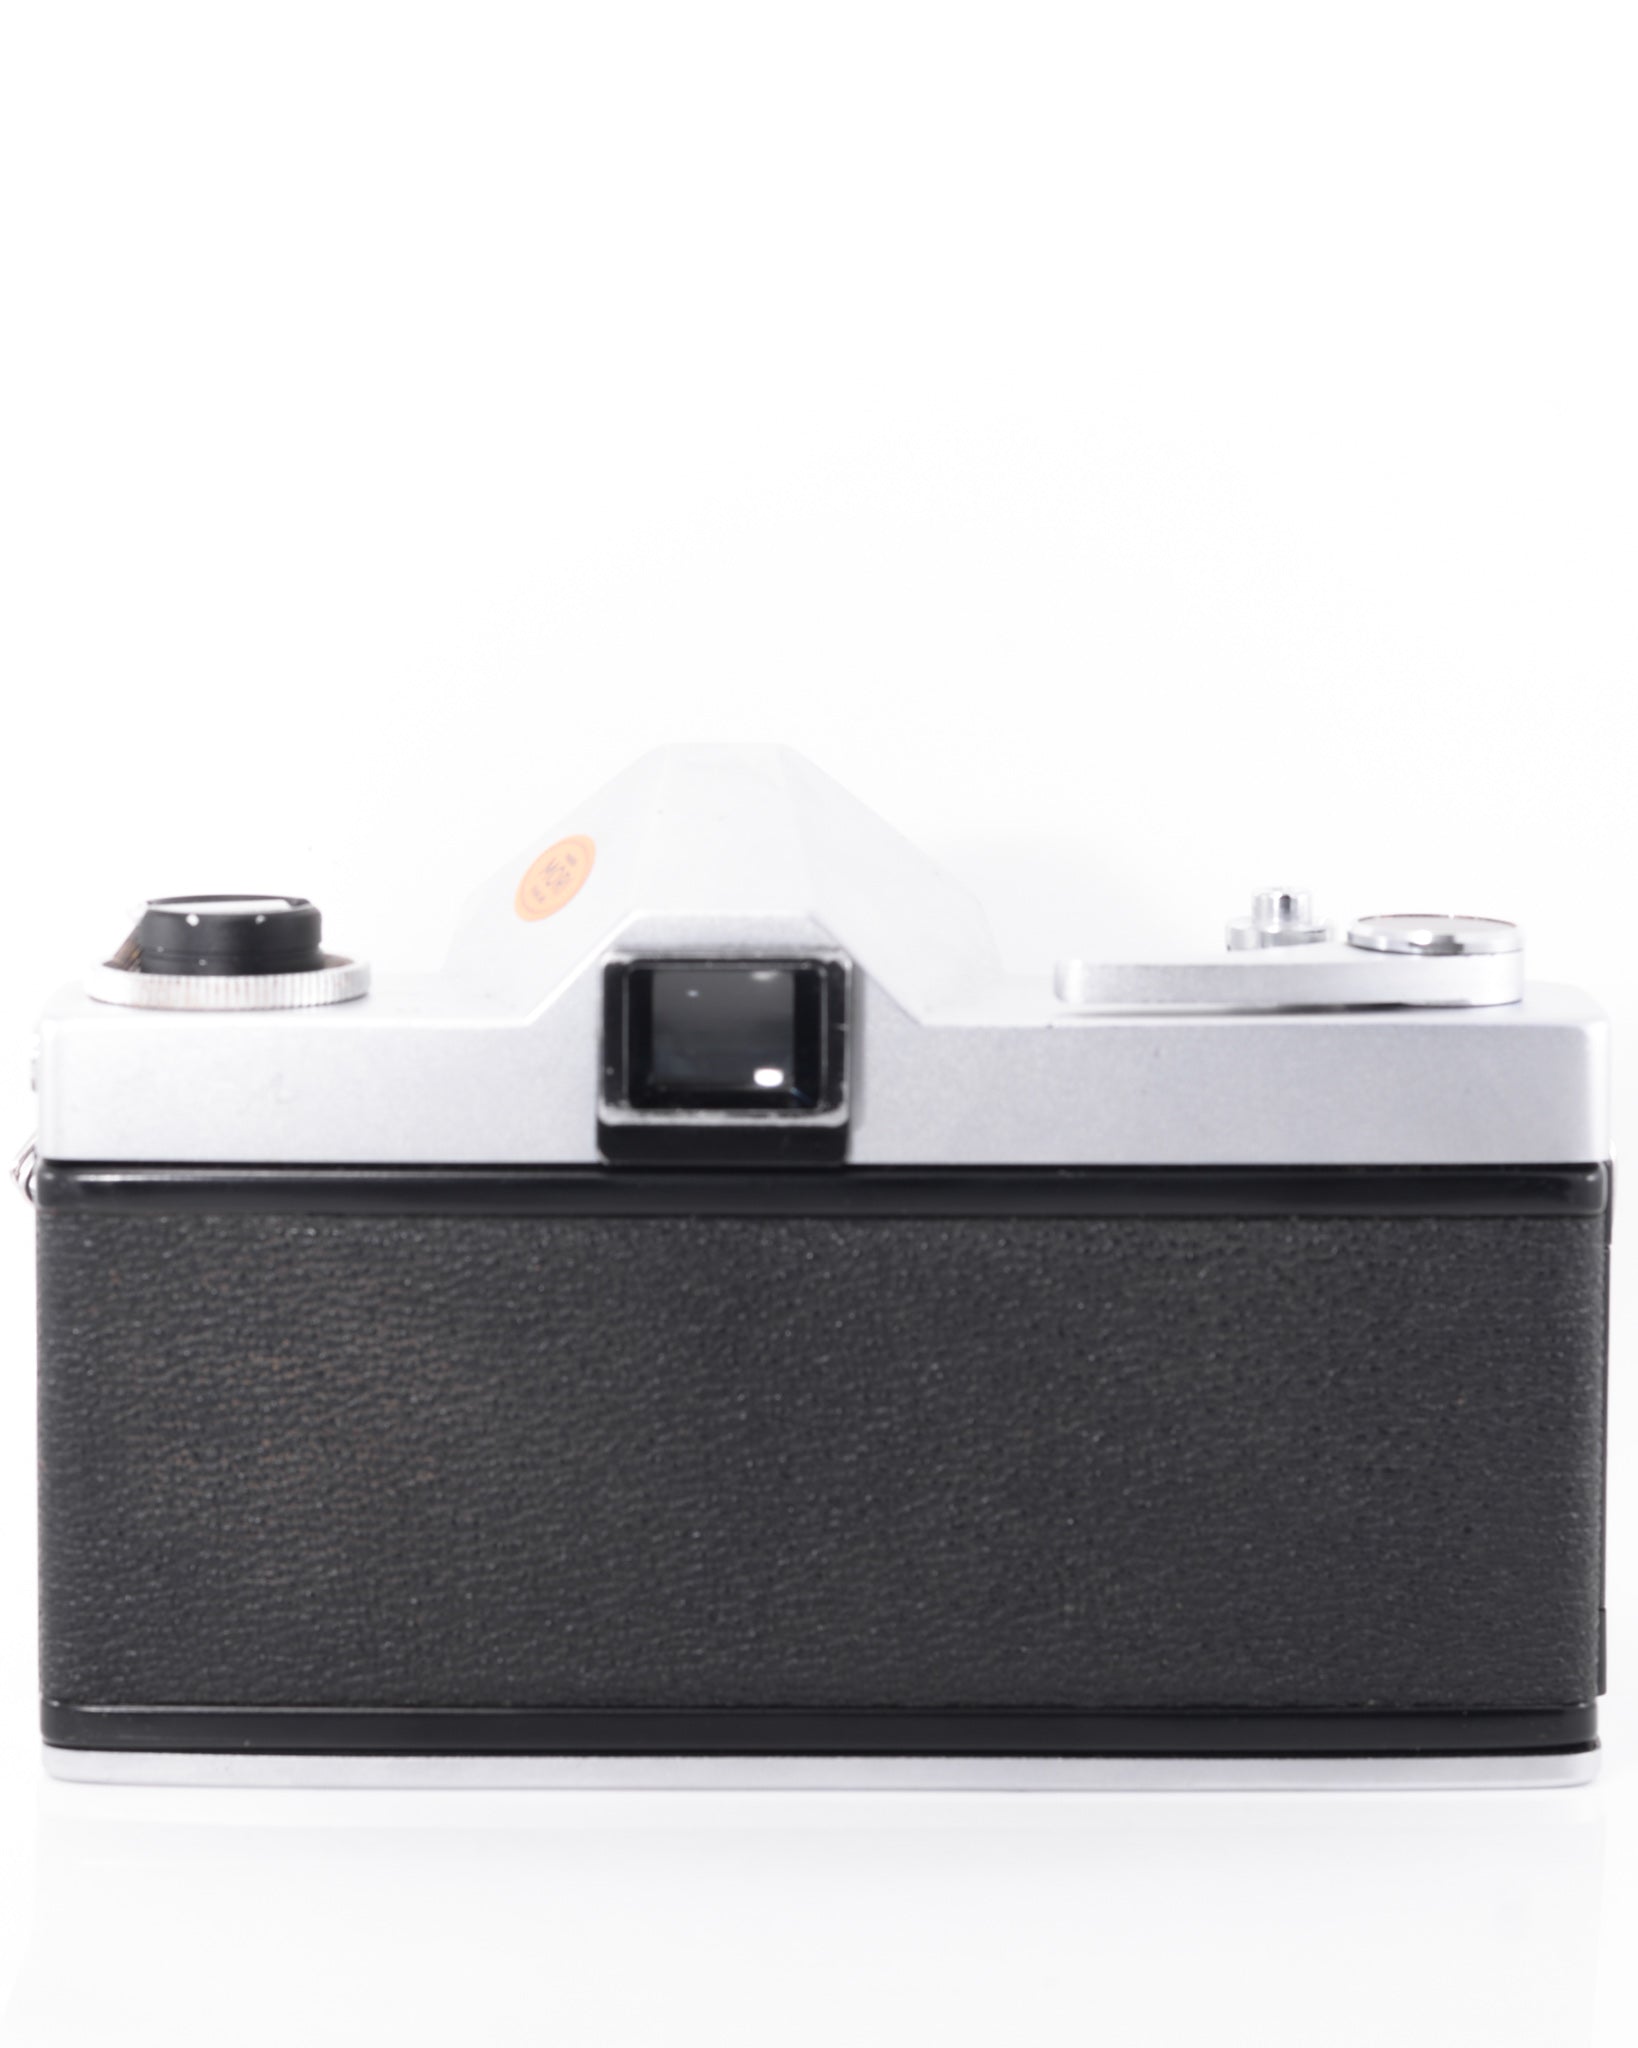 Chinon Riaflex TTL 35mm SLR Film Camera with 35mm f2.8 Lens